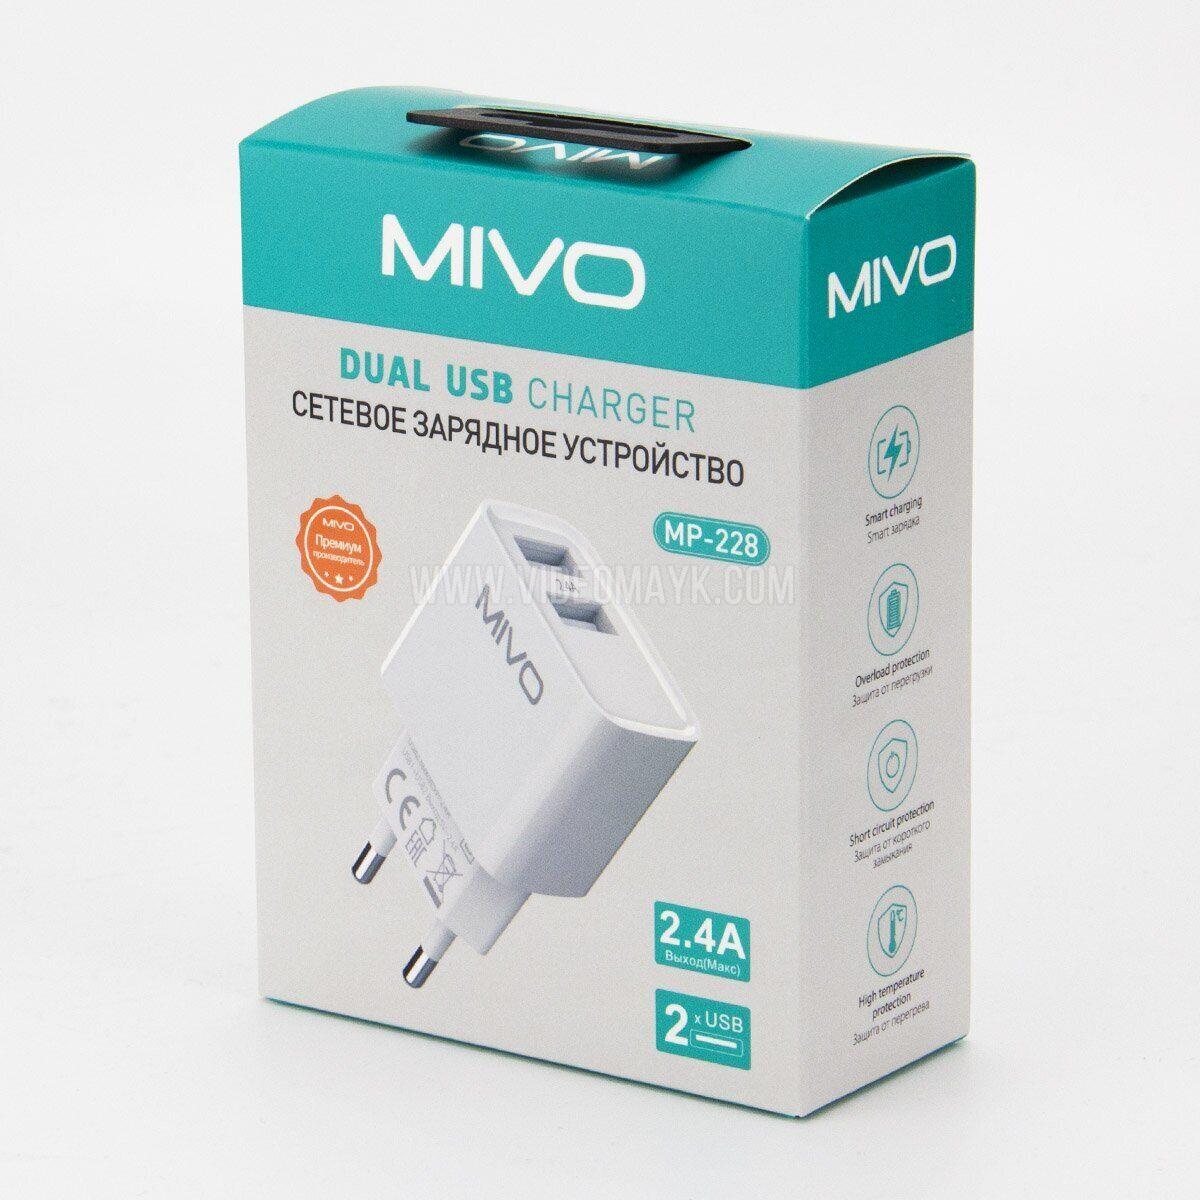 Сетевое зарядное устройство Mivo MP-228